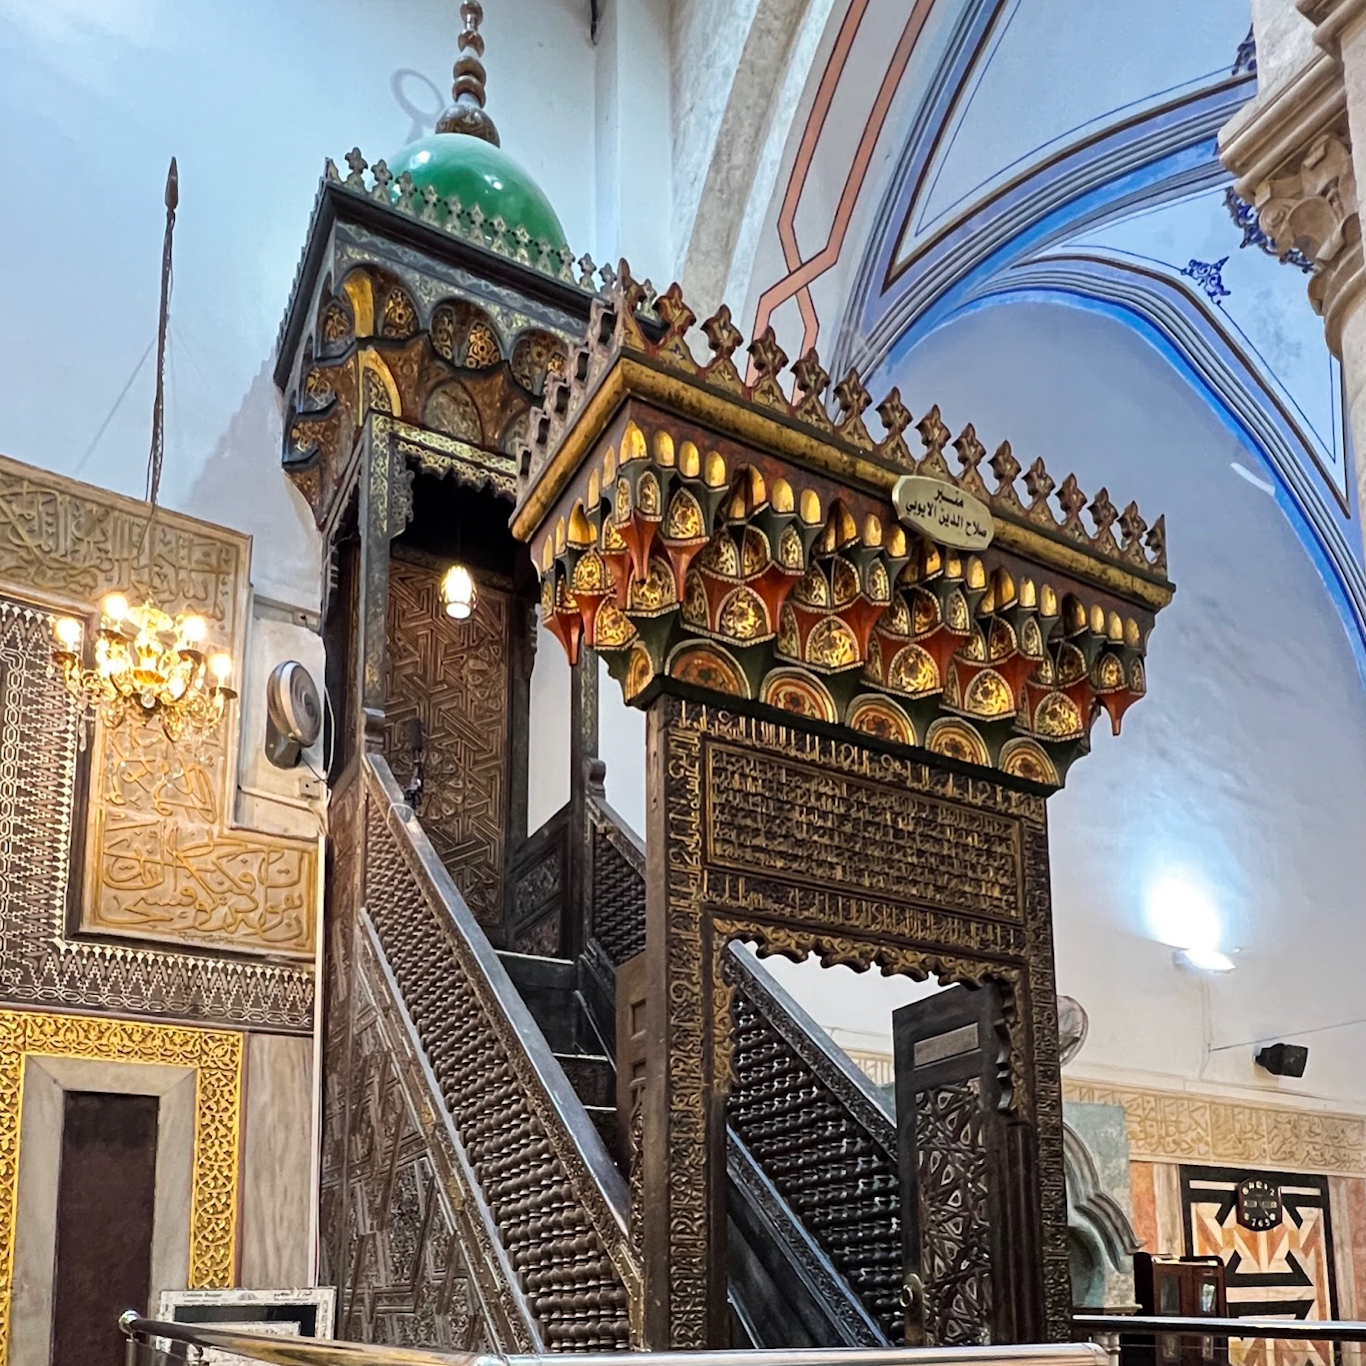 The Saladdin Rostrum in Hebron